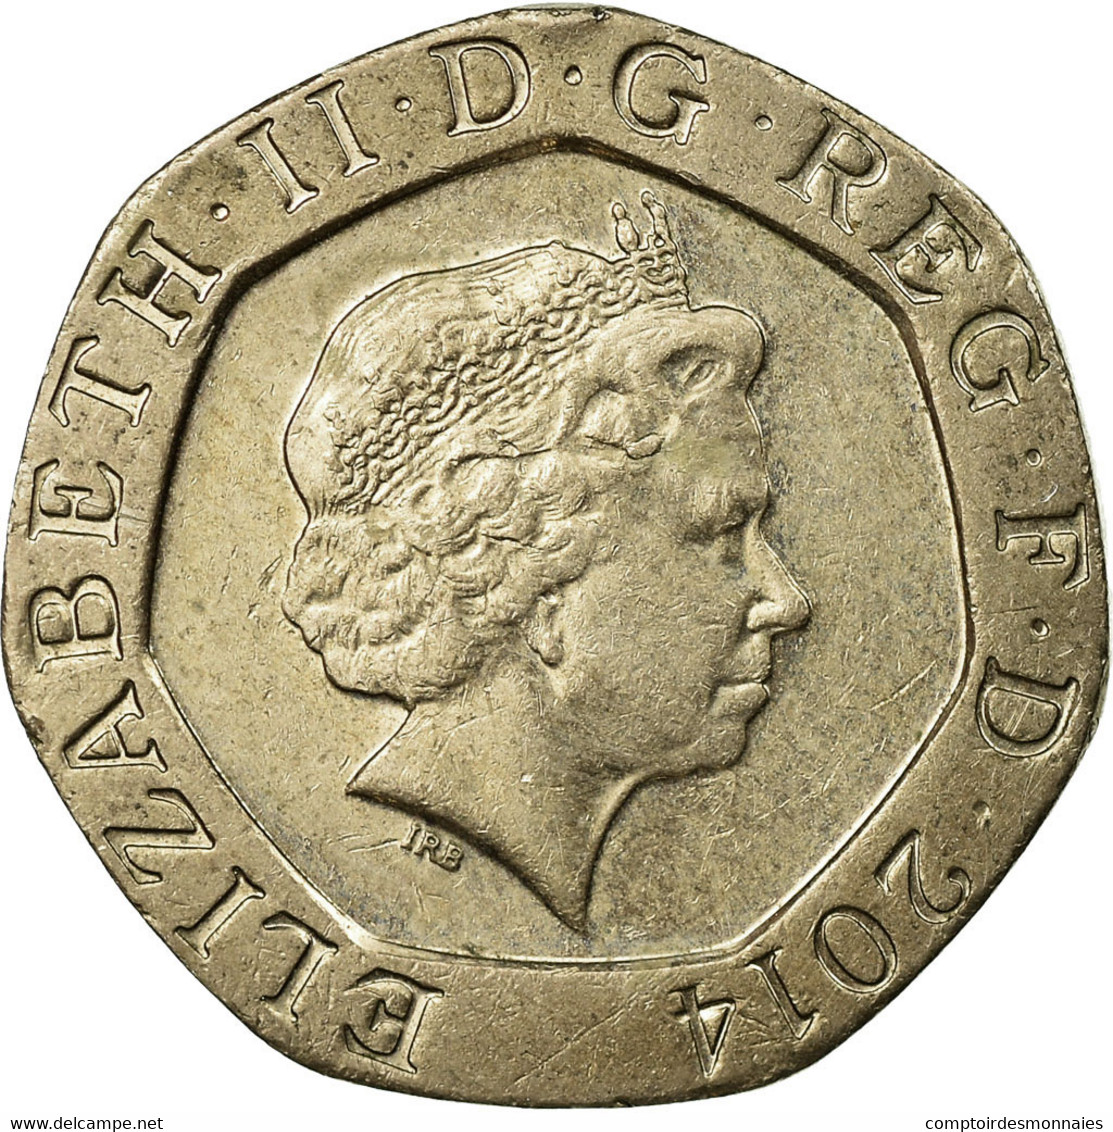 Monnaie, Grande-Bretagne, 20 Pence, 2014, TTB, Cupro-nickel, KM:1111 - 20 Pence